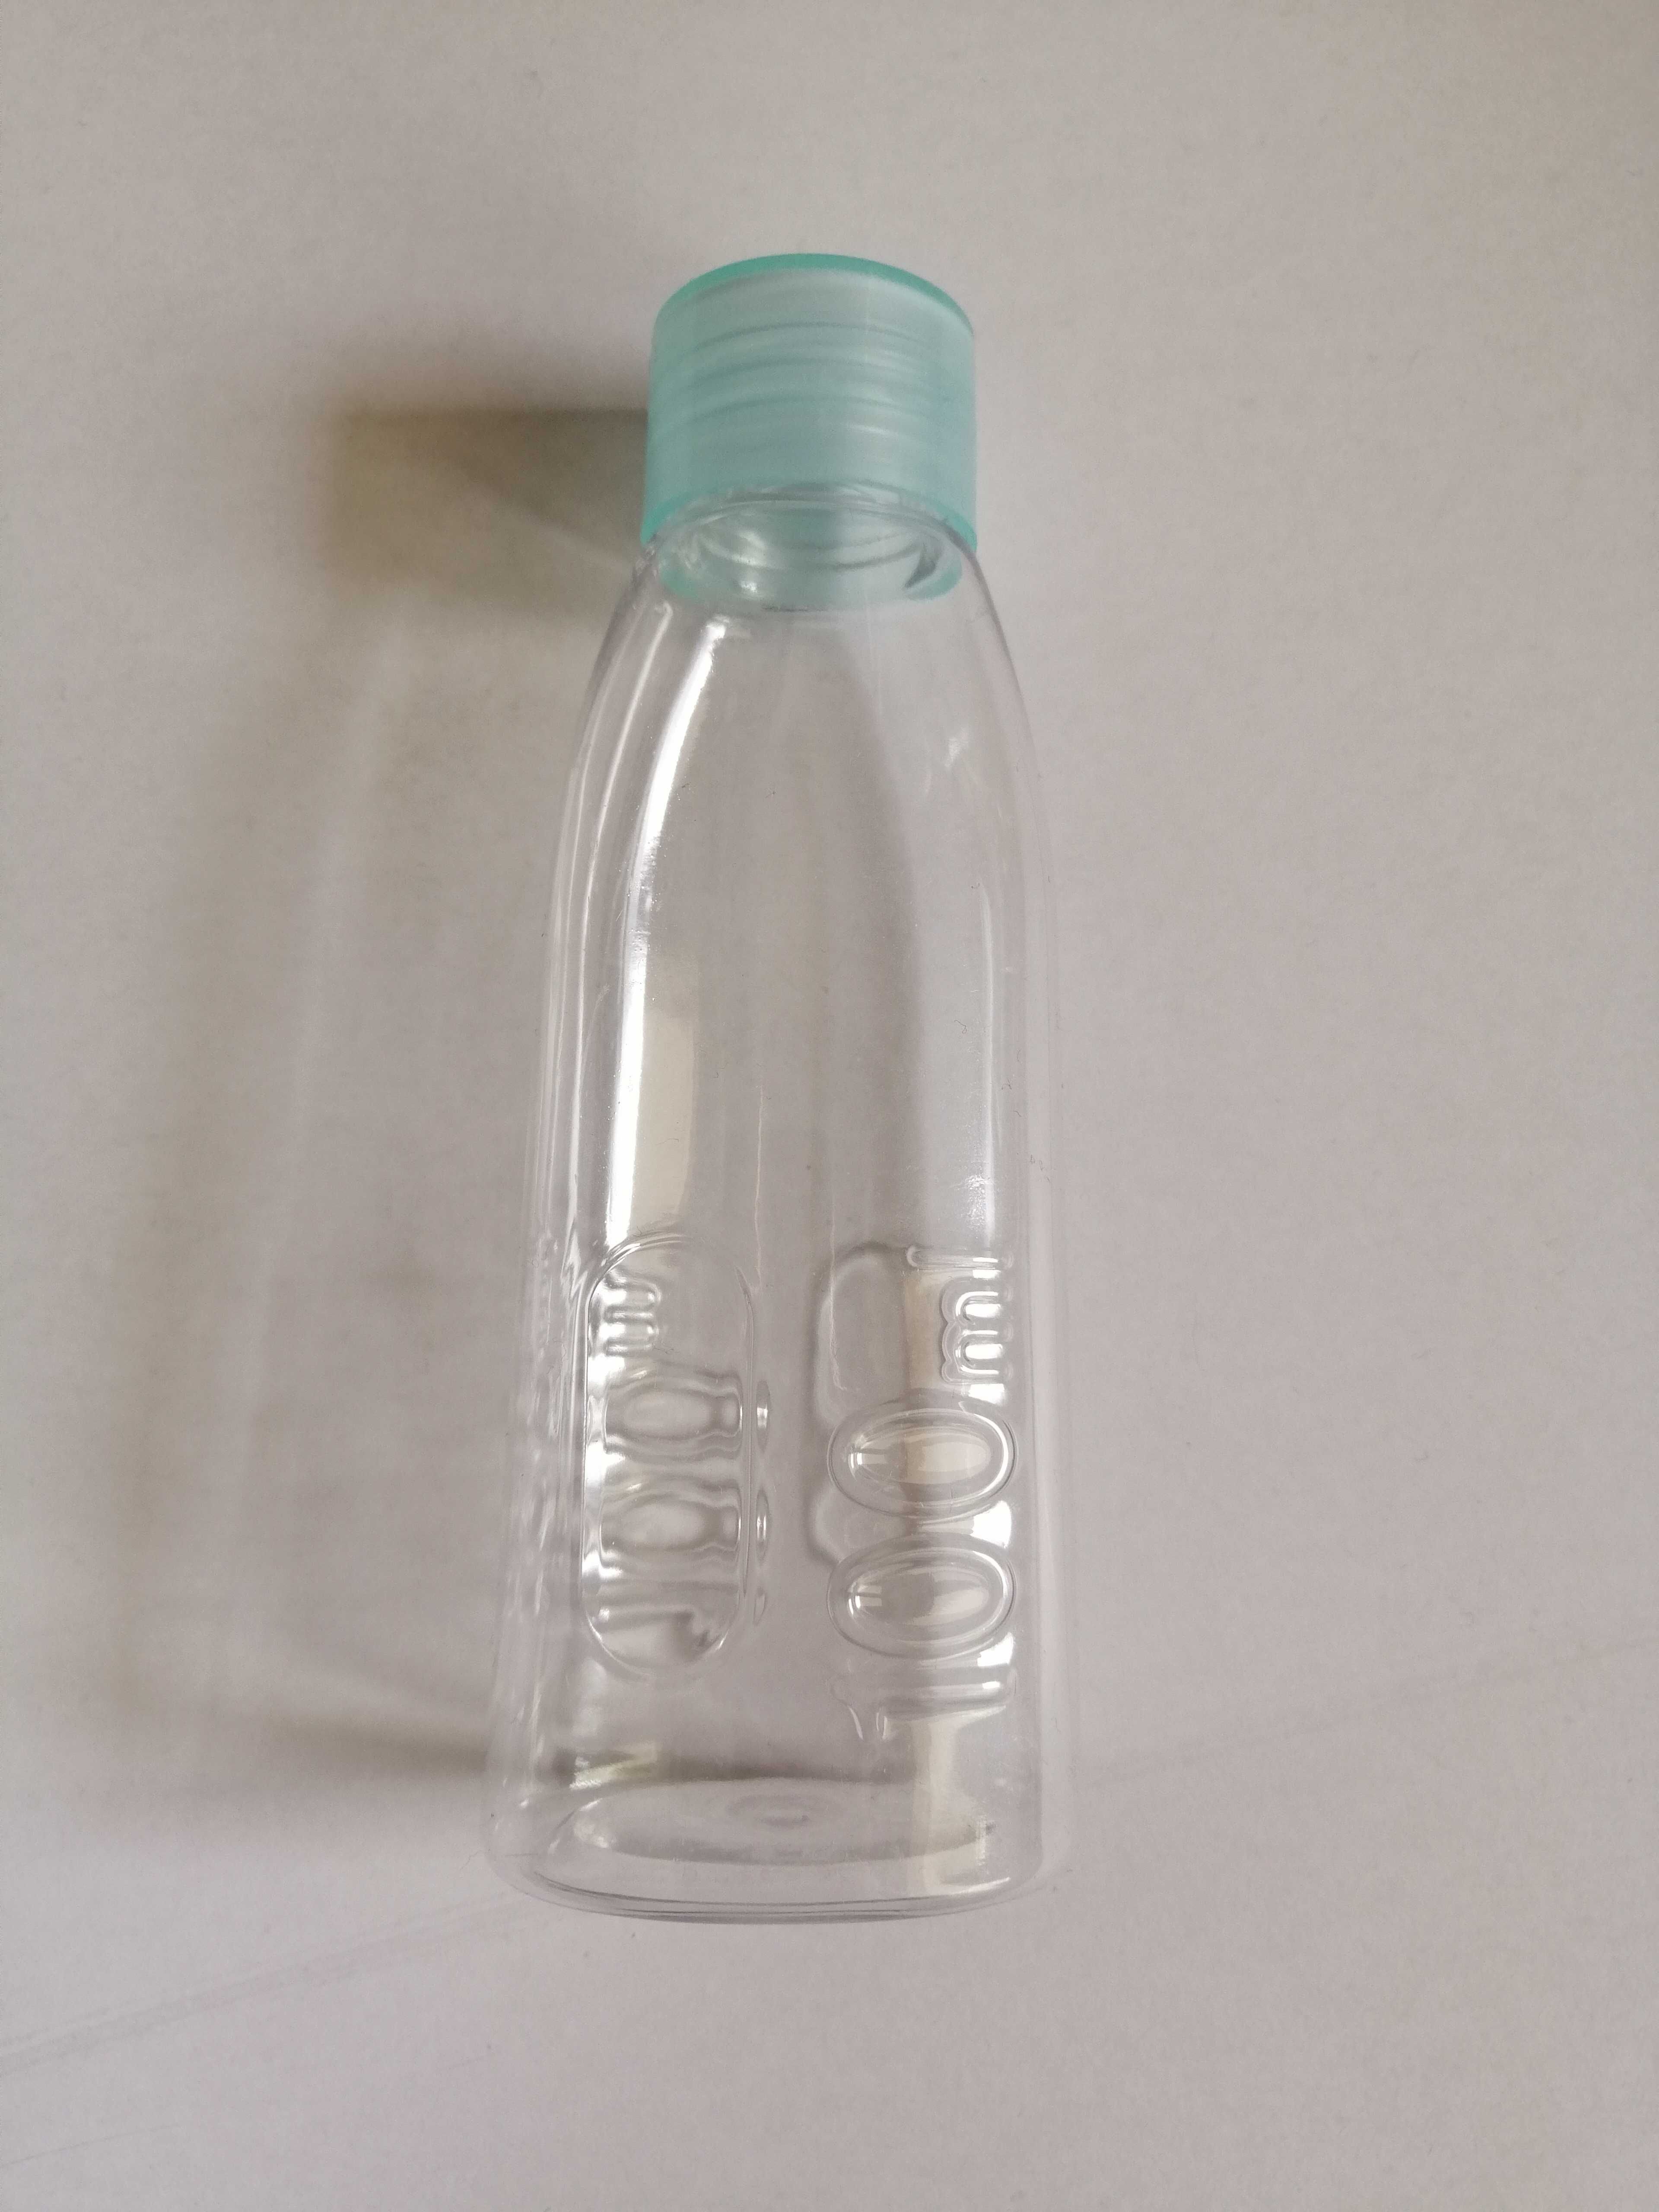 Butelka plastikowa 100ml. Nowa, podróżna